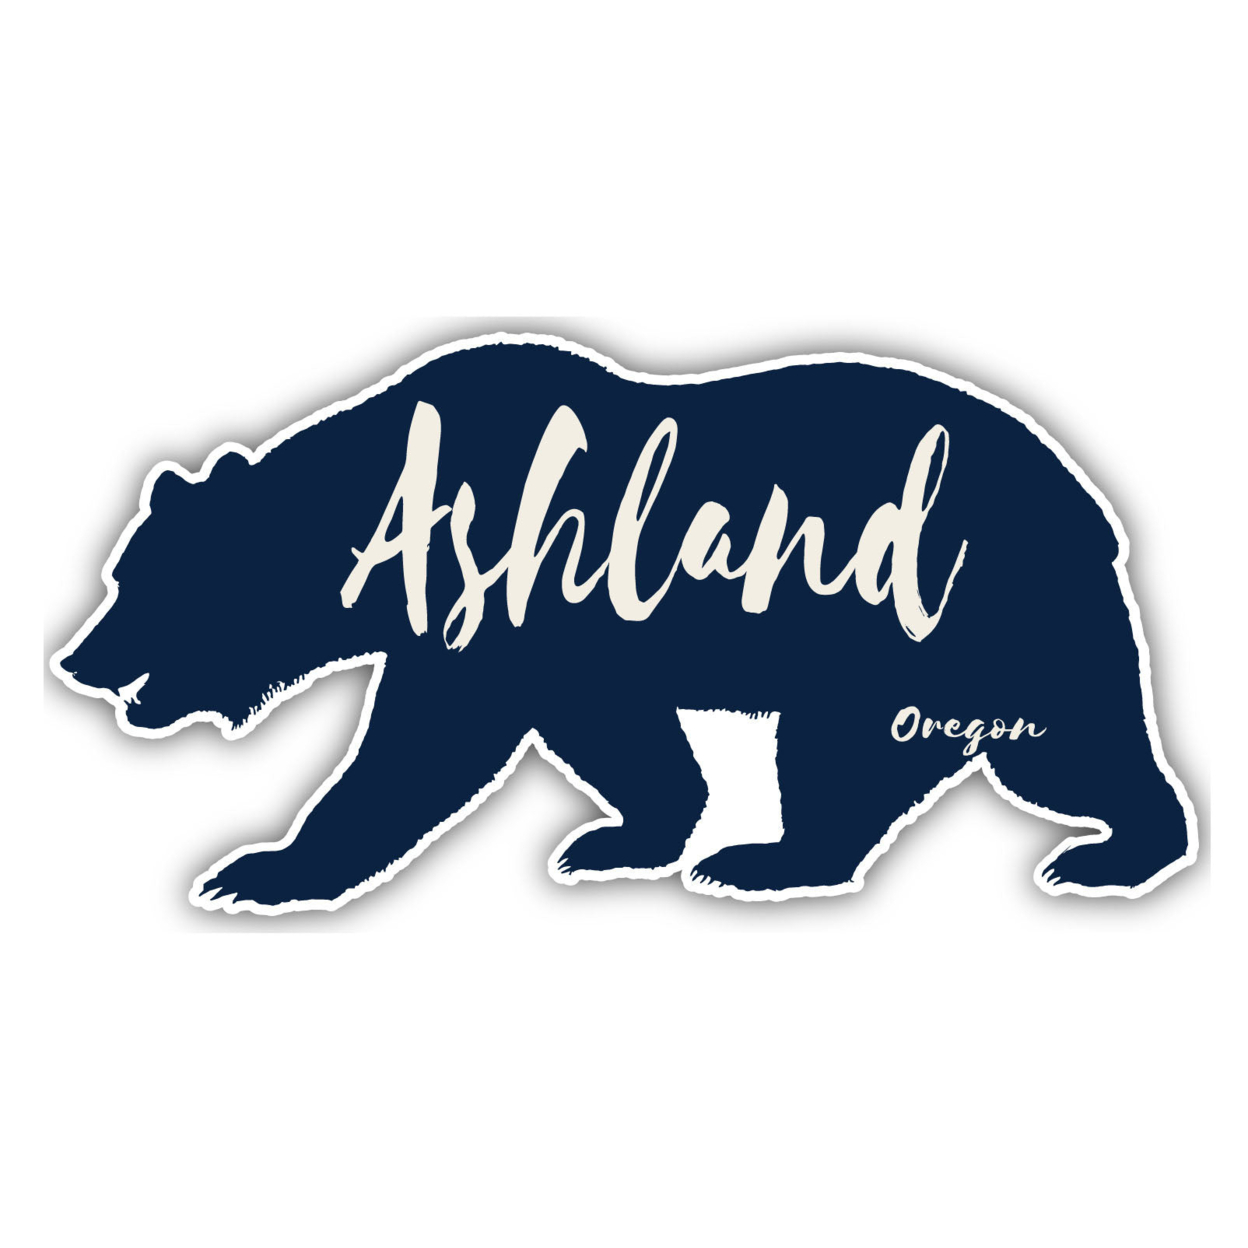 Ashland Oregon Souvenir Decorative Stickers (Choose Theme And Size) - 4-Pack, 4-Inch, Tent